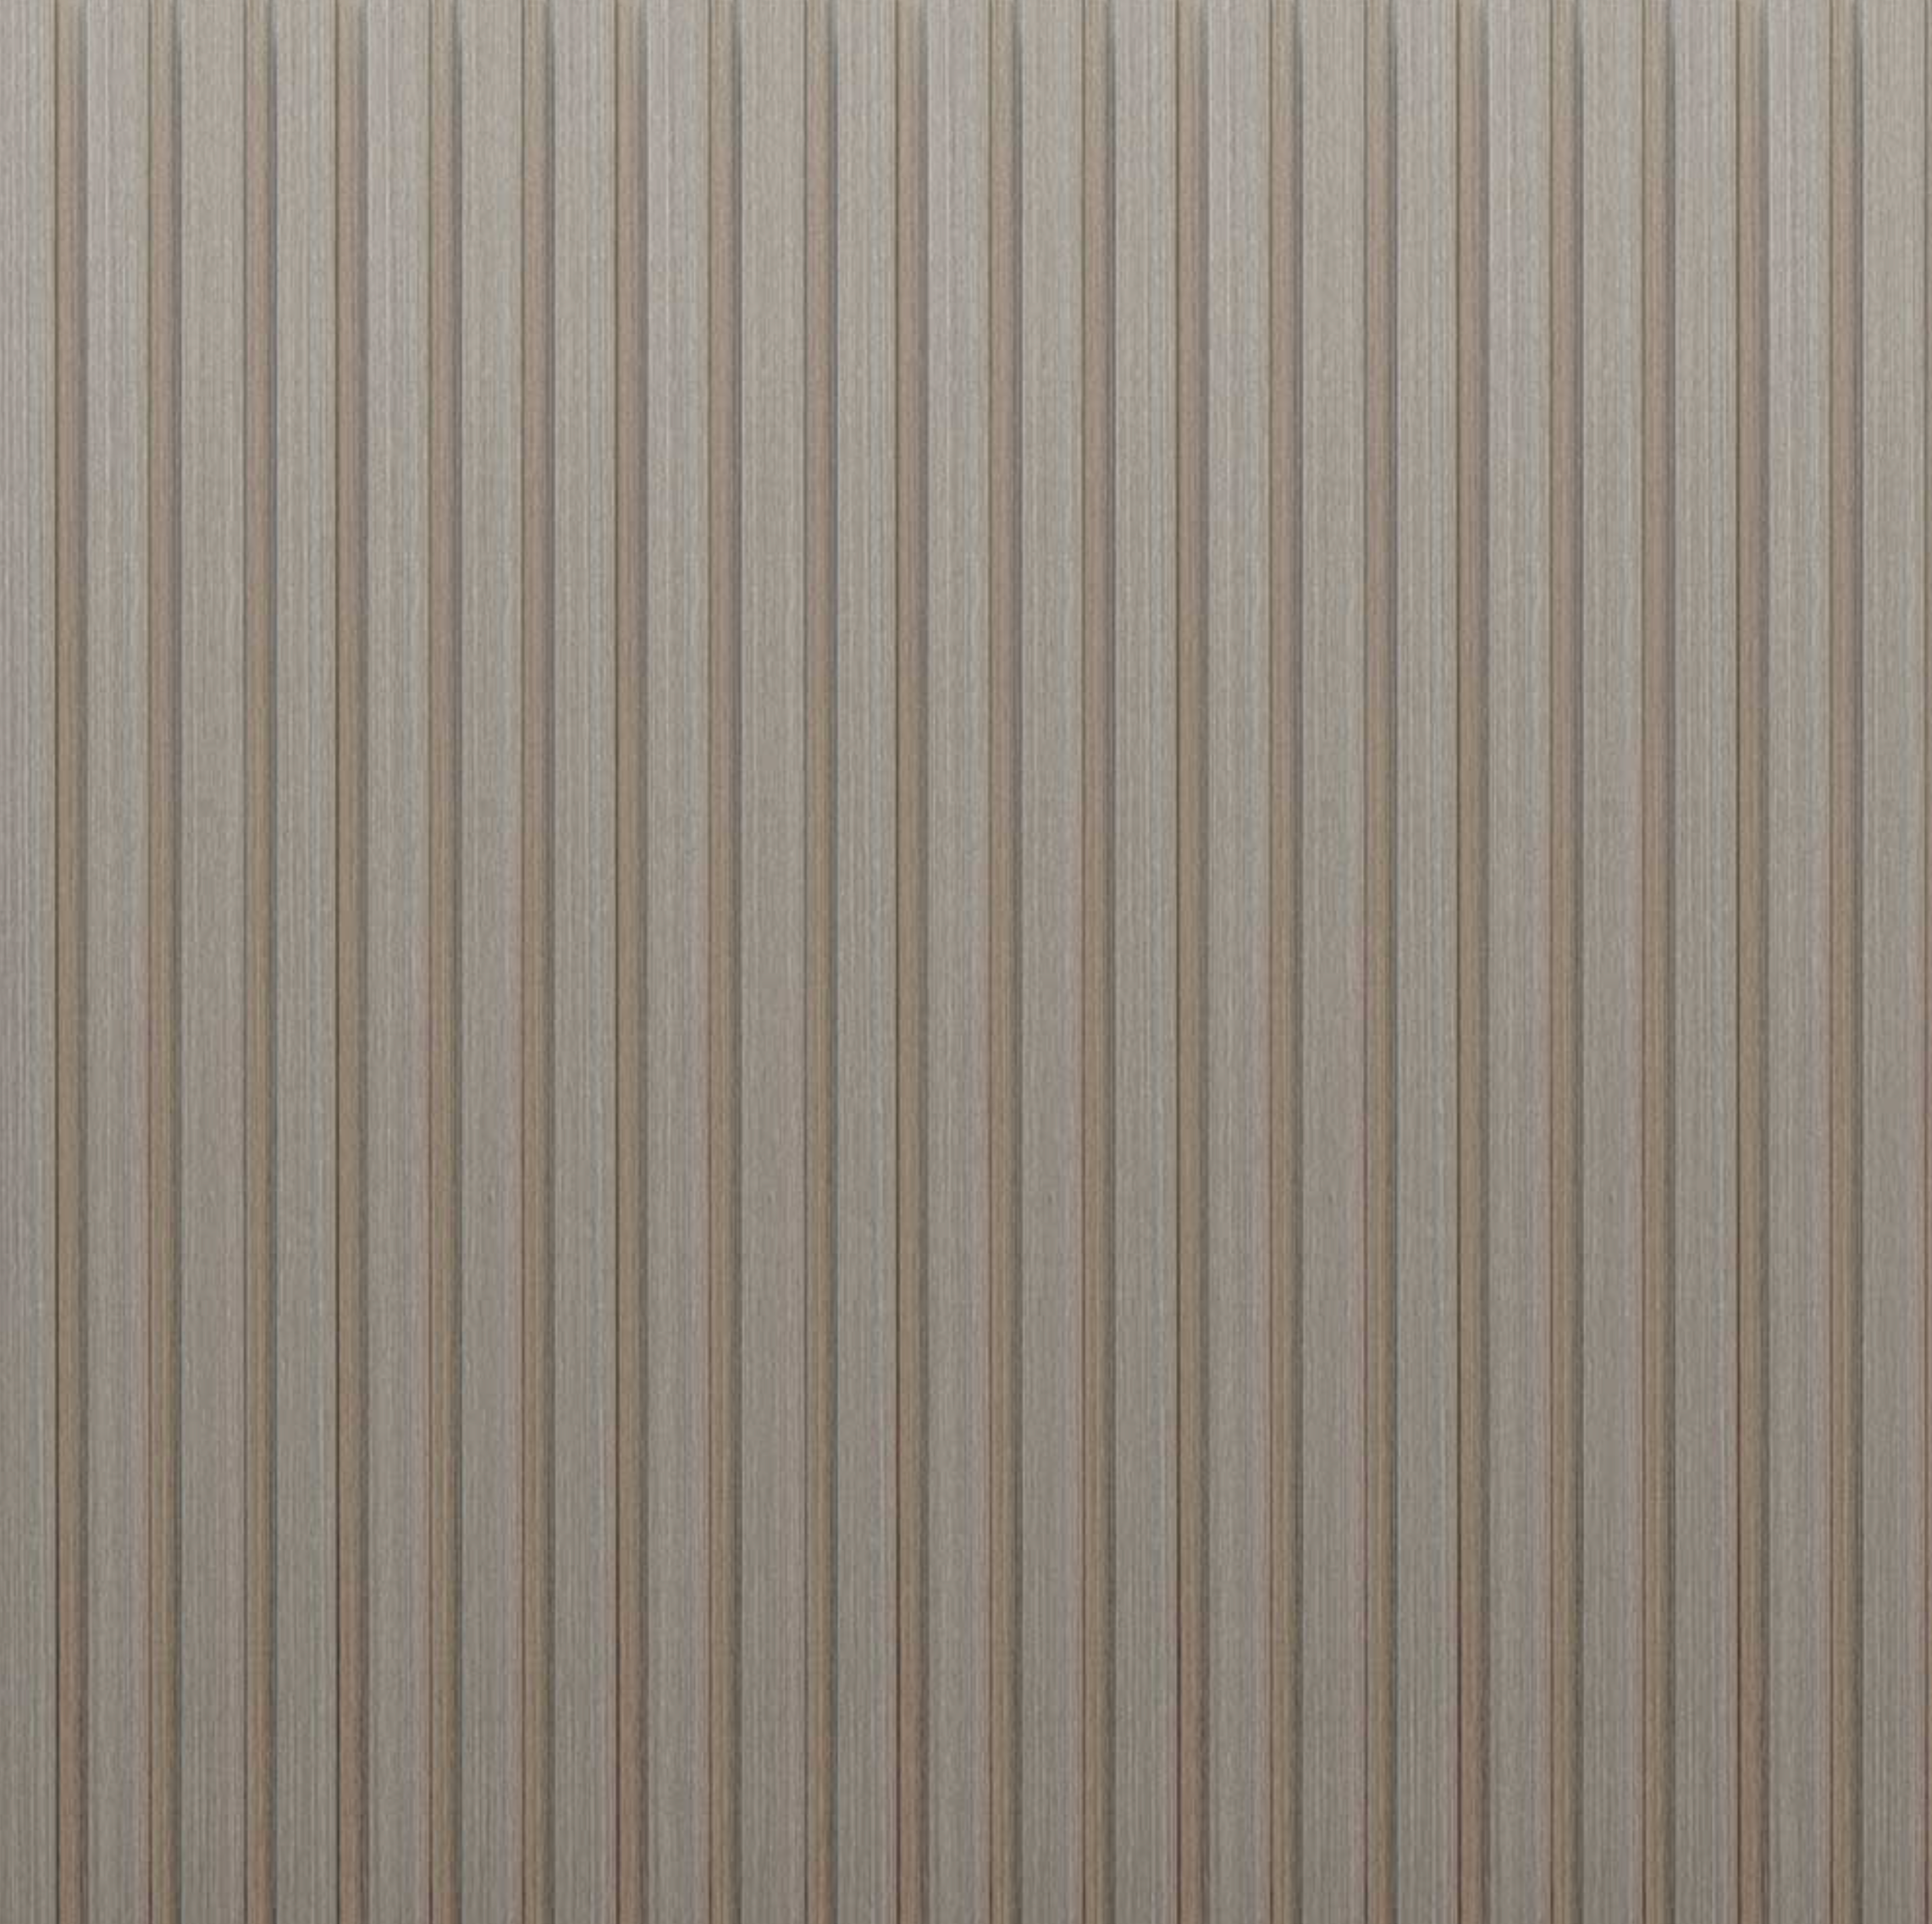 PVC Thermo-Slat Wall Panel - Ash Grey